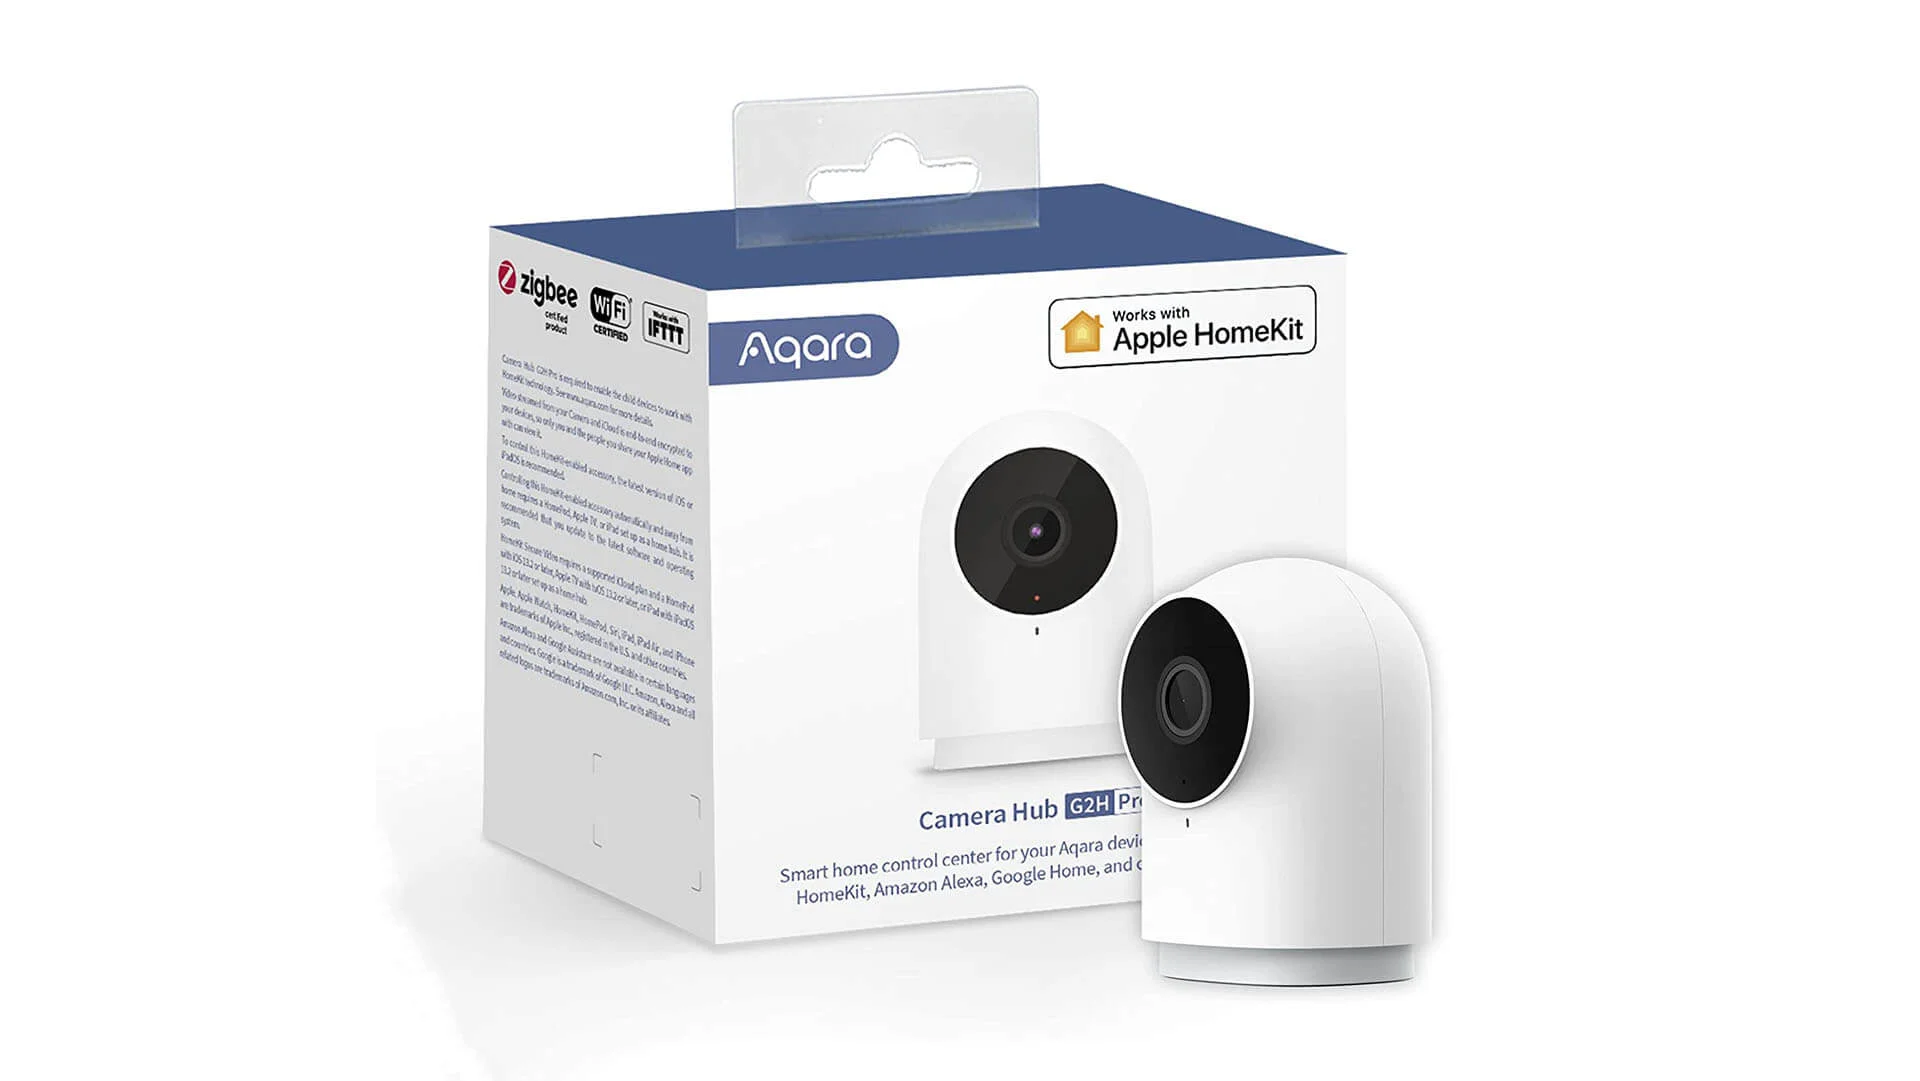 Aqara Hub M2, Zigbee Certified Smart Home Hub, Connect It